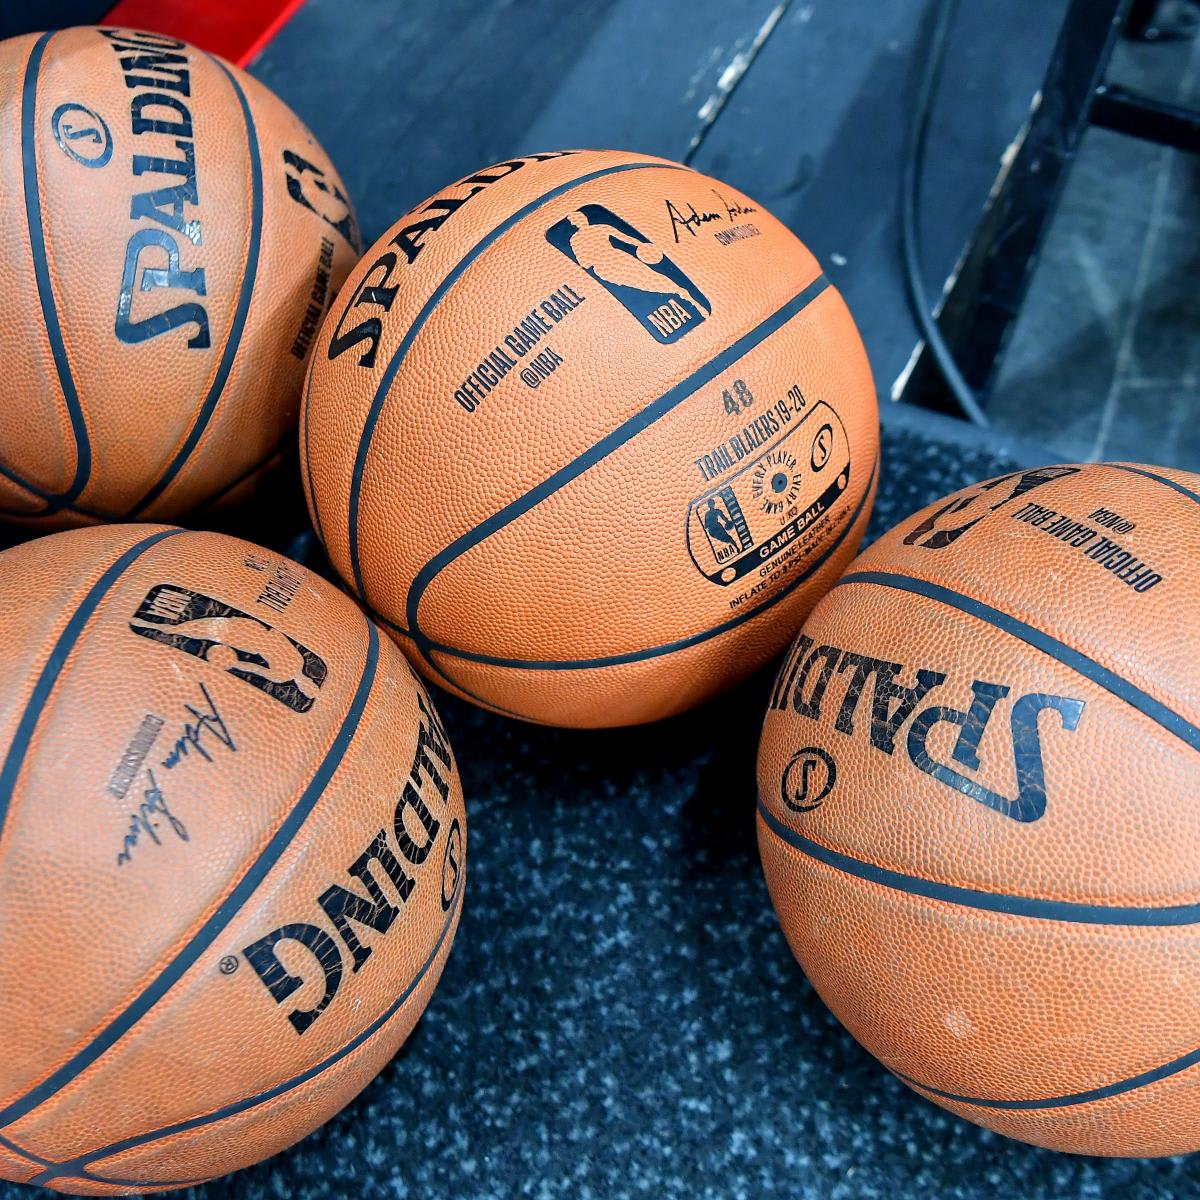 NBA Announces Revised 2019-20 Season Schedule for Return After COVID-19 Hiatus